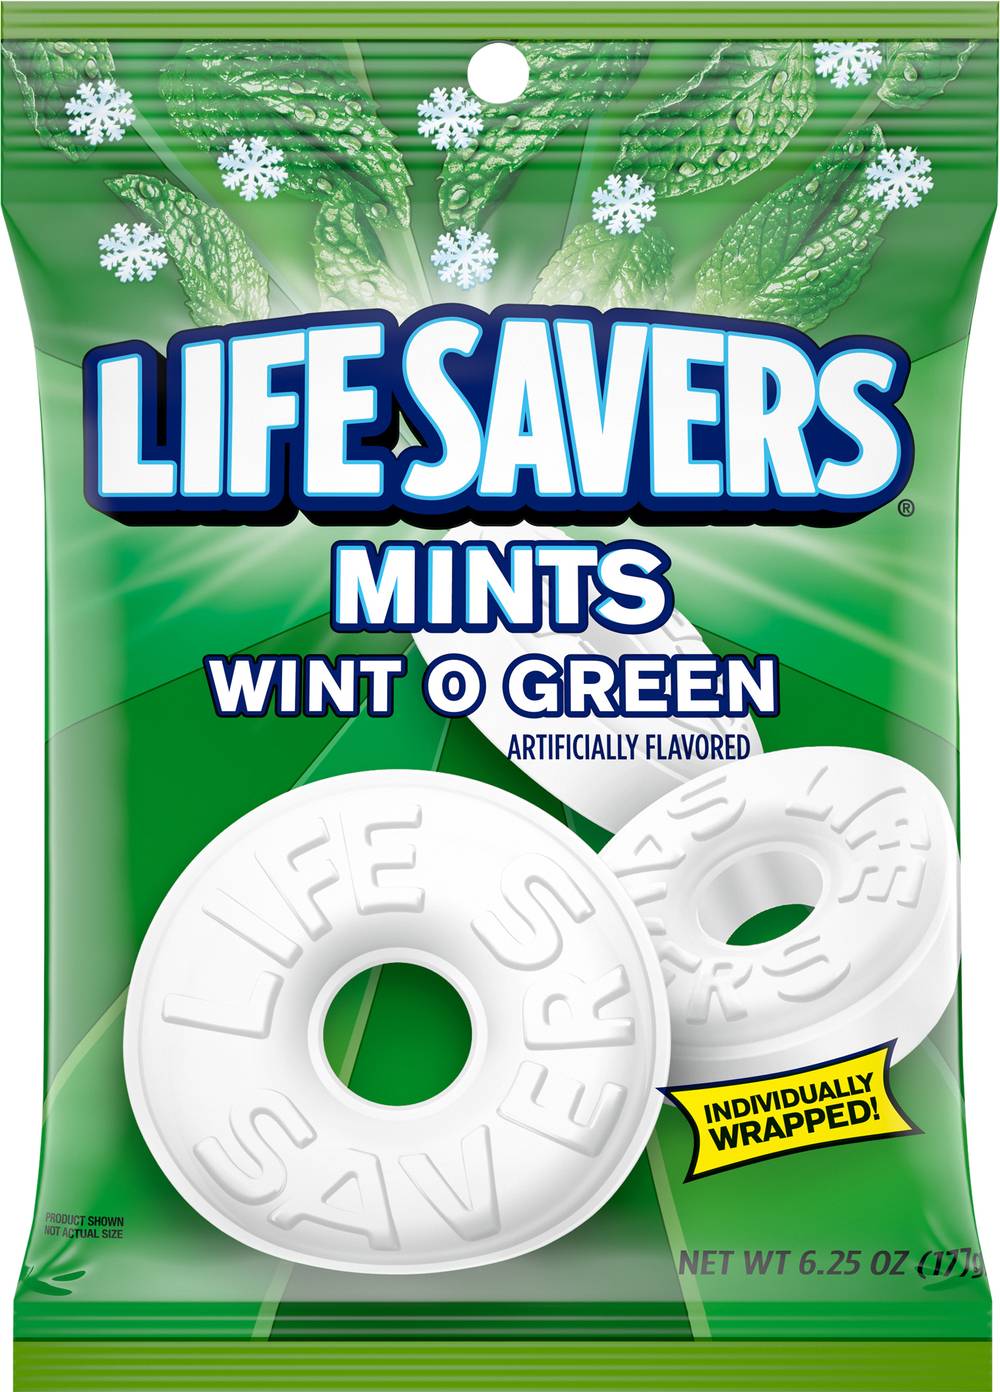 Life Savers Mints (wint o green)